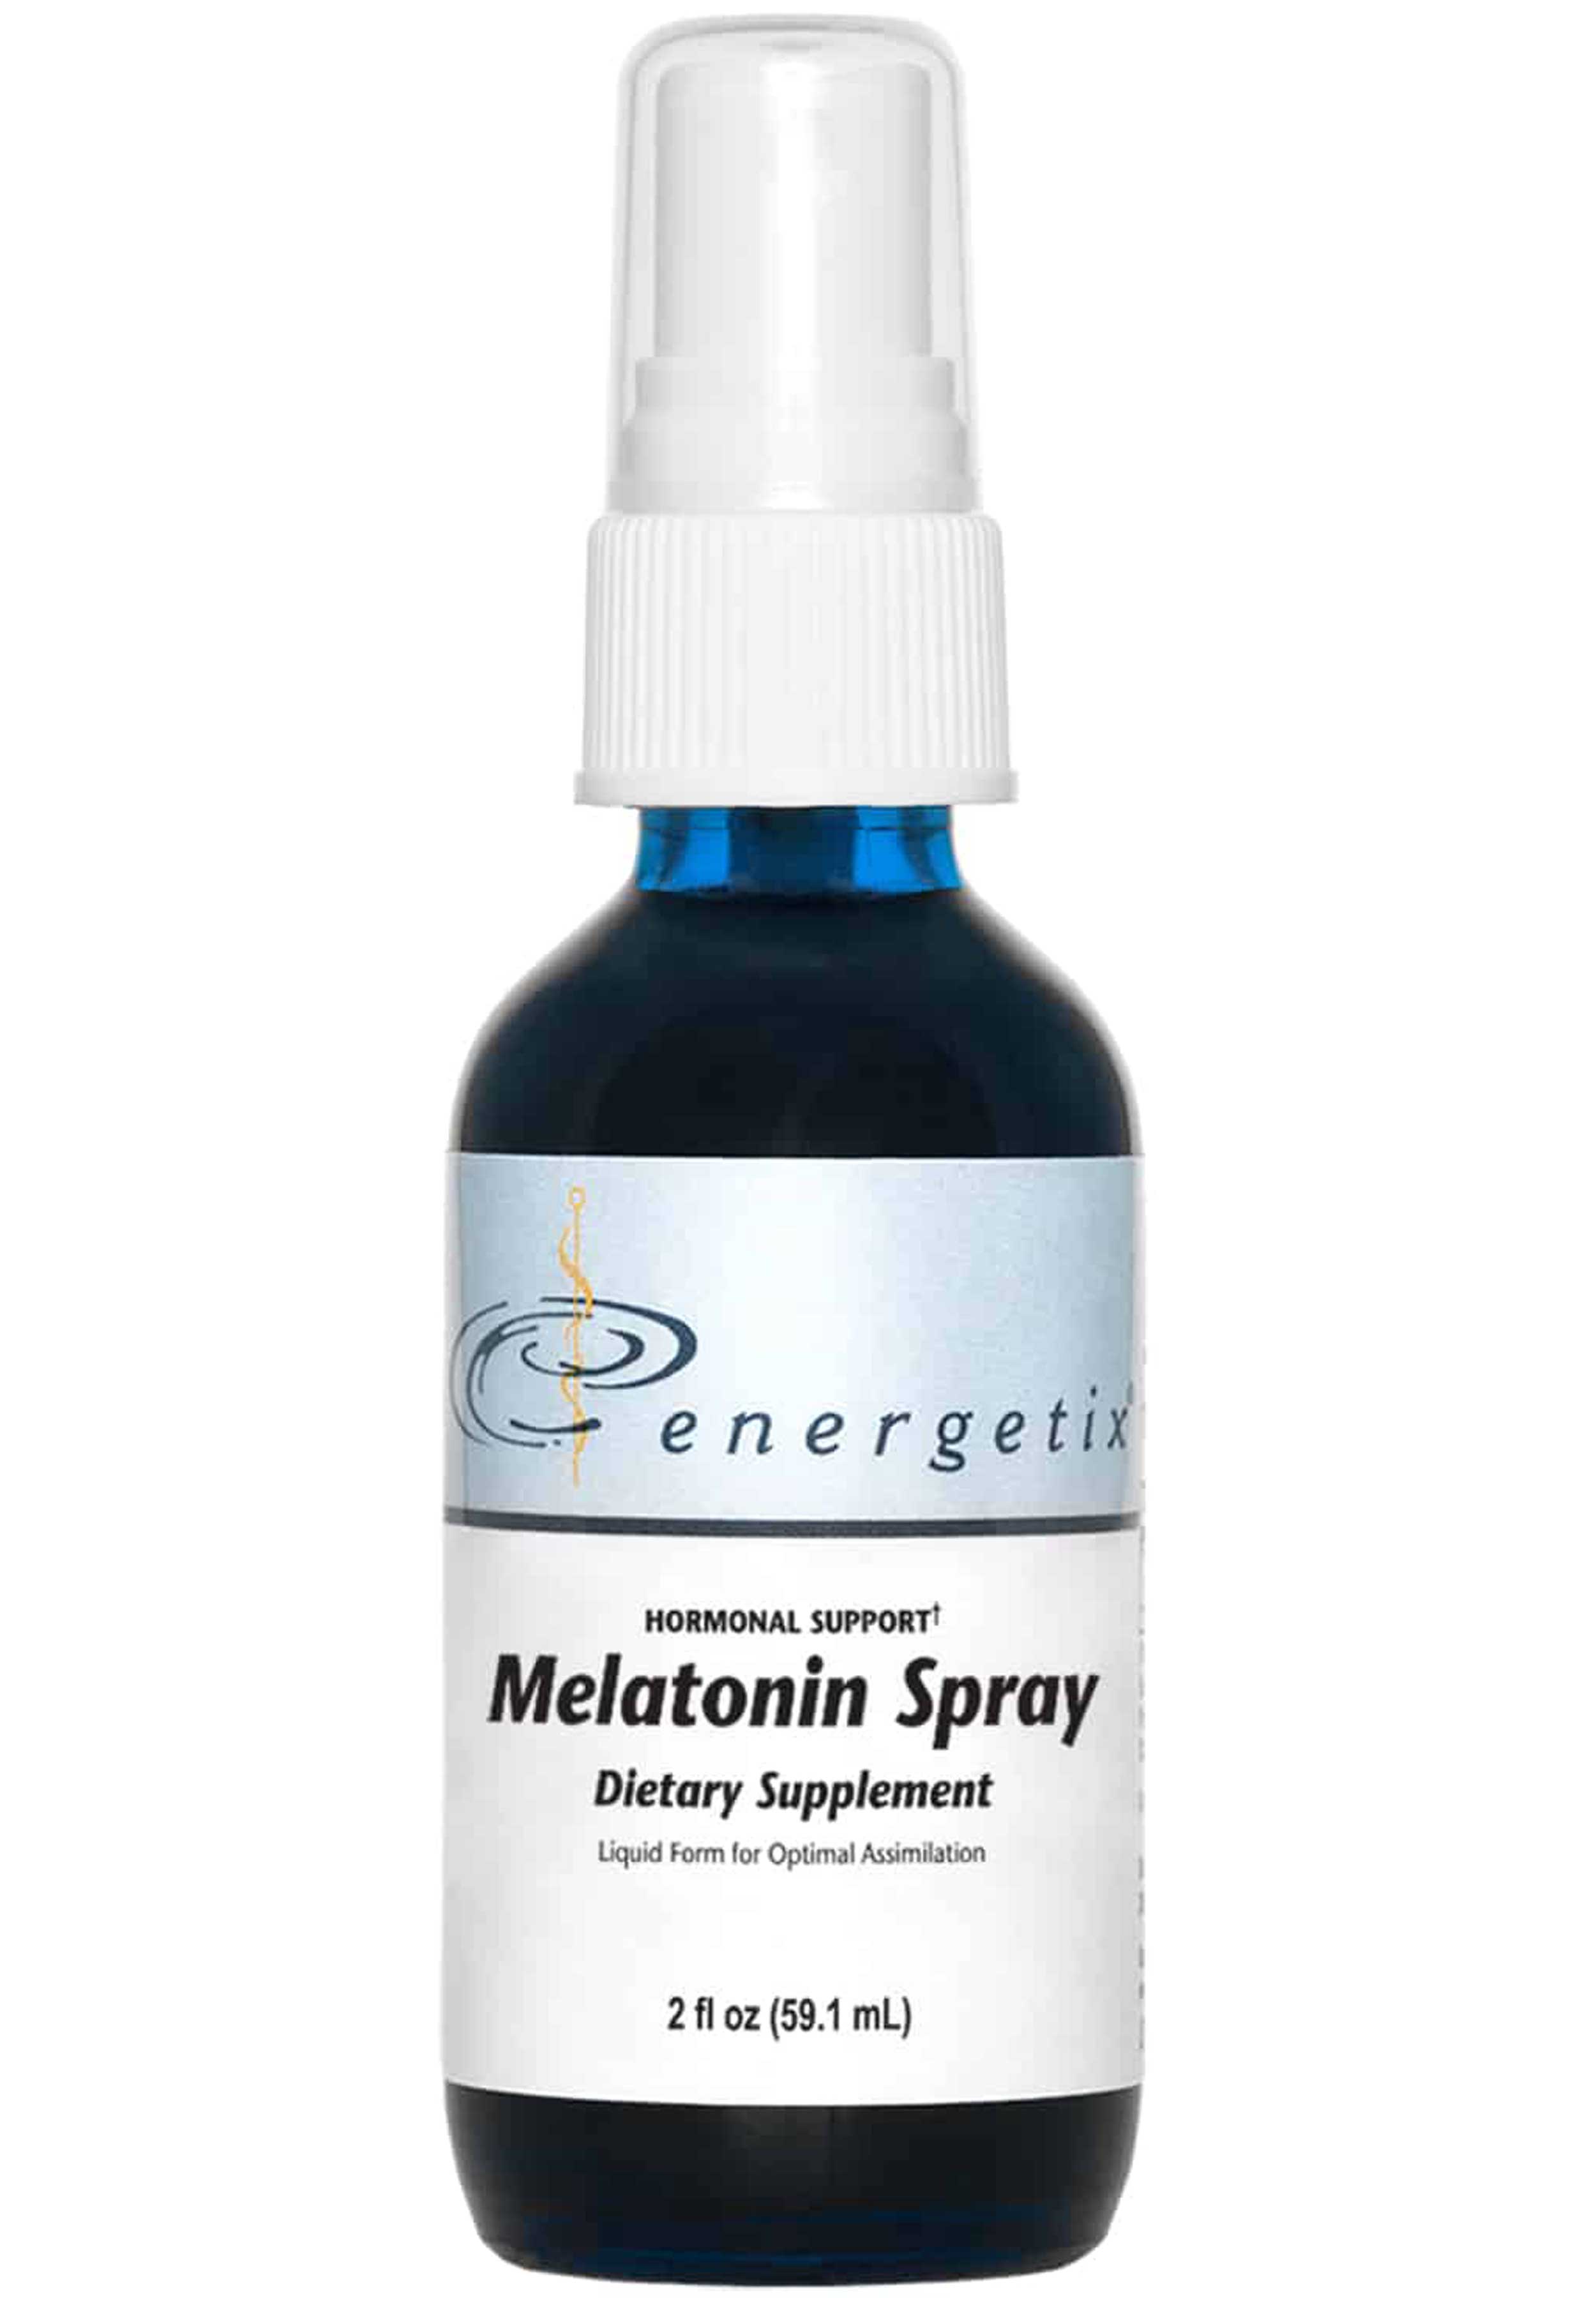 Energetix Melatonin Spray